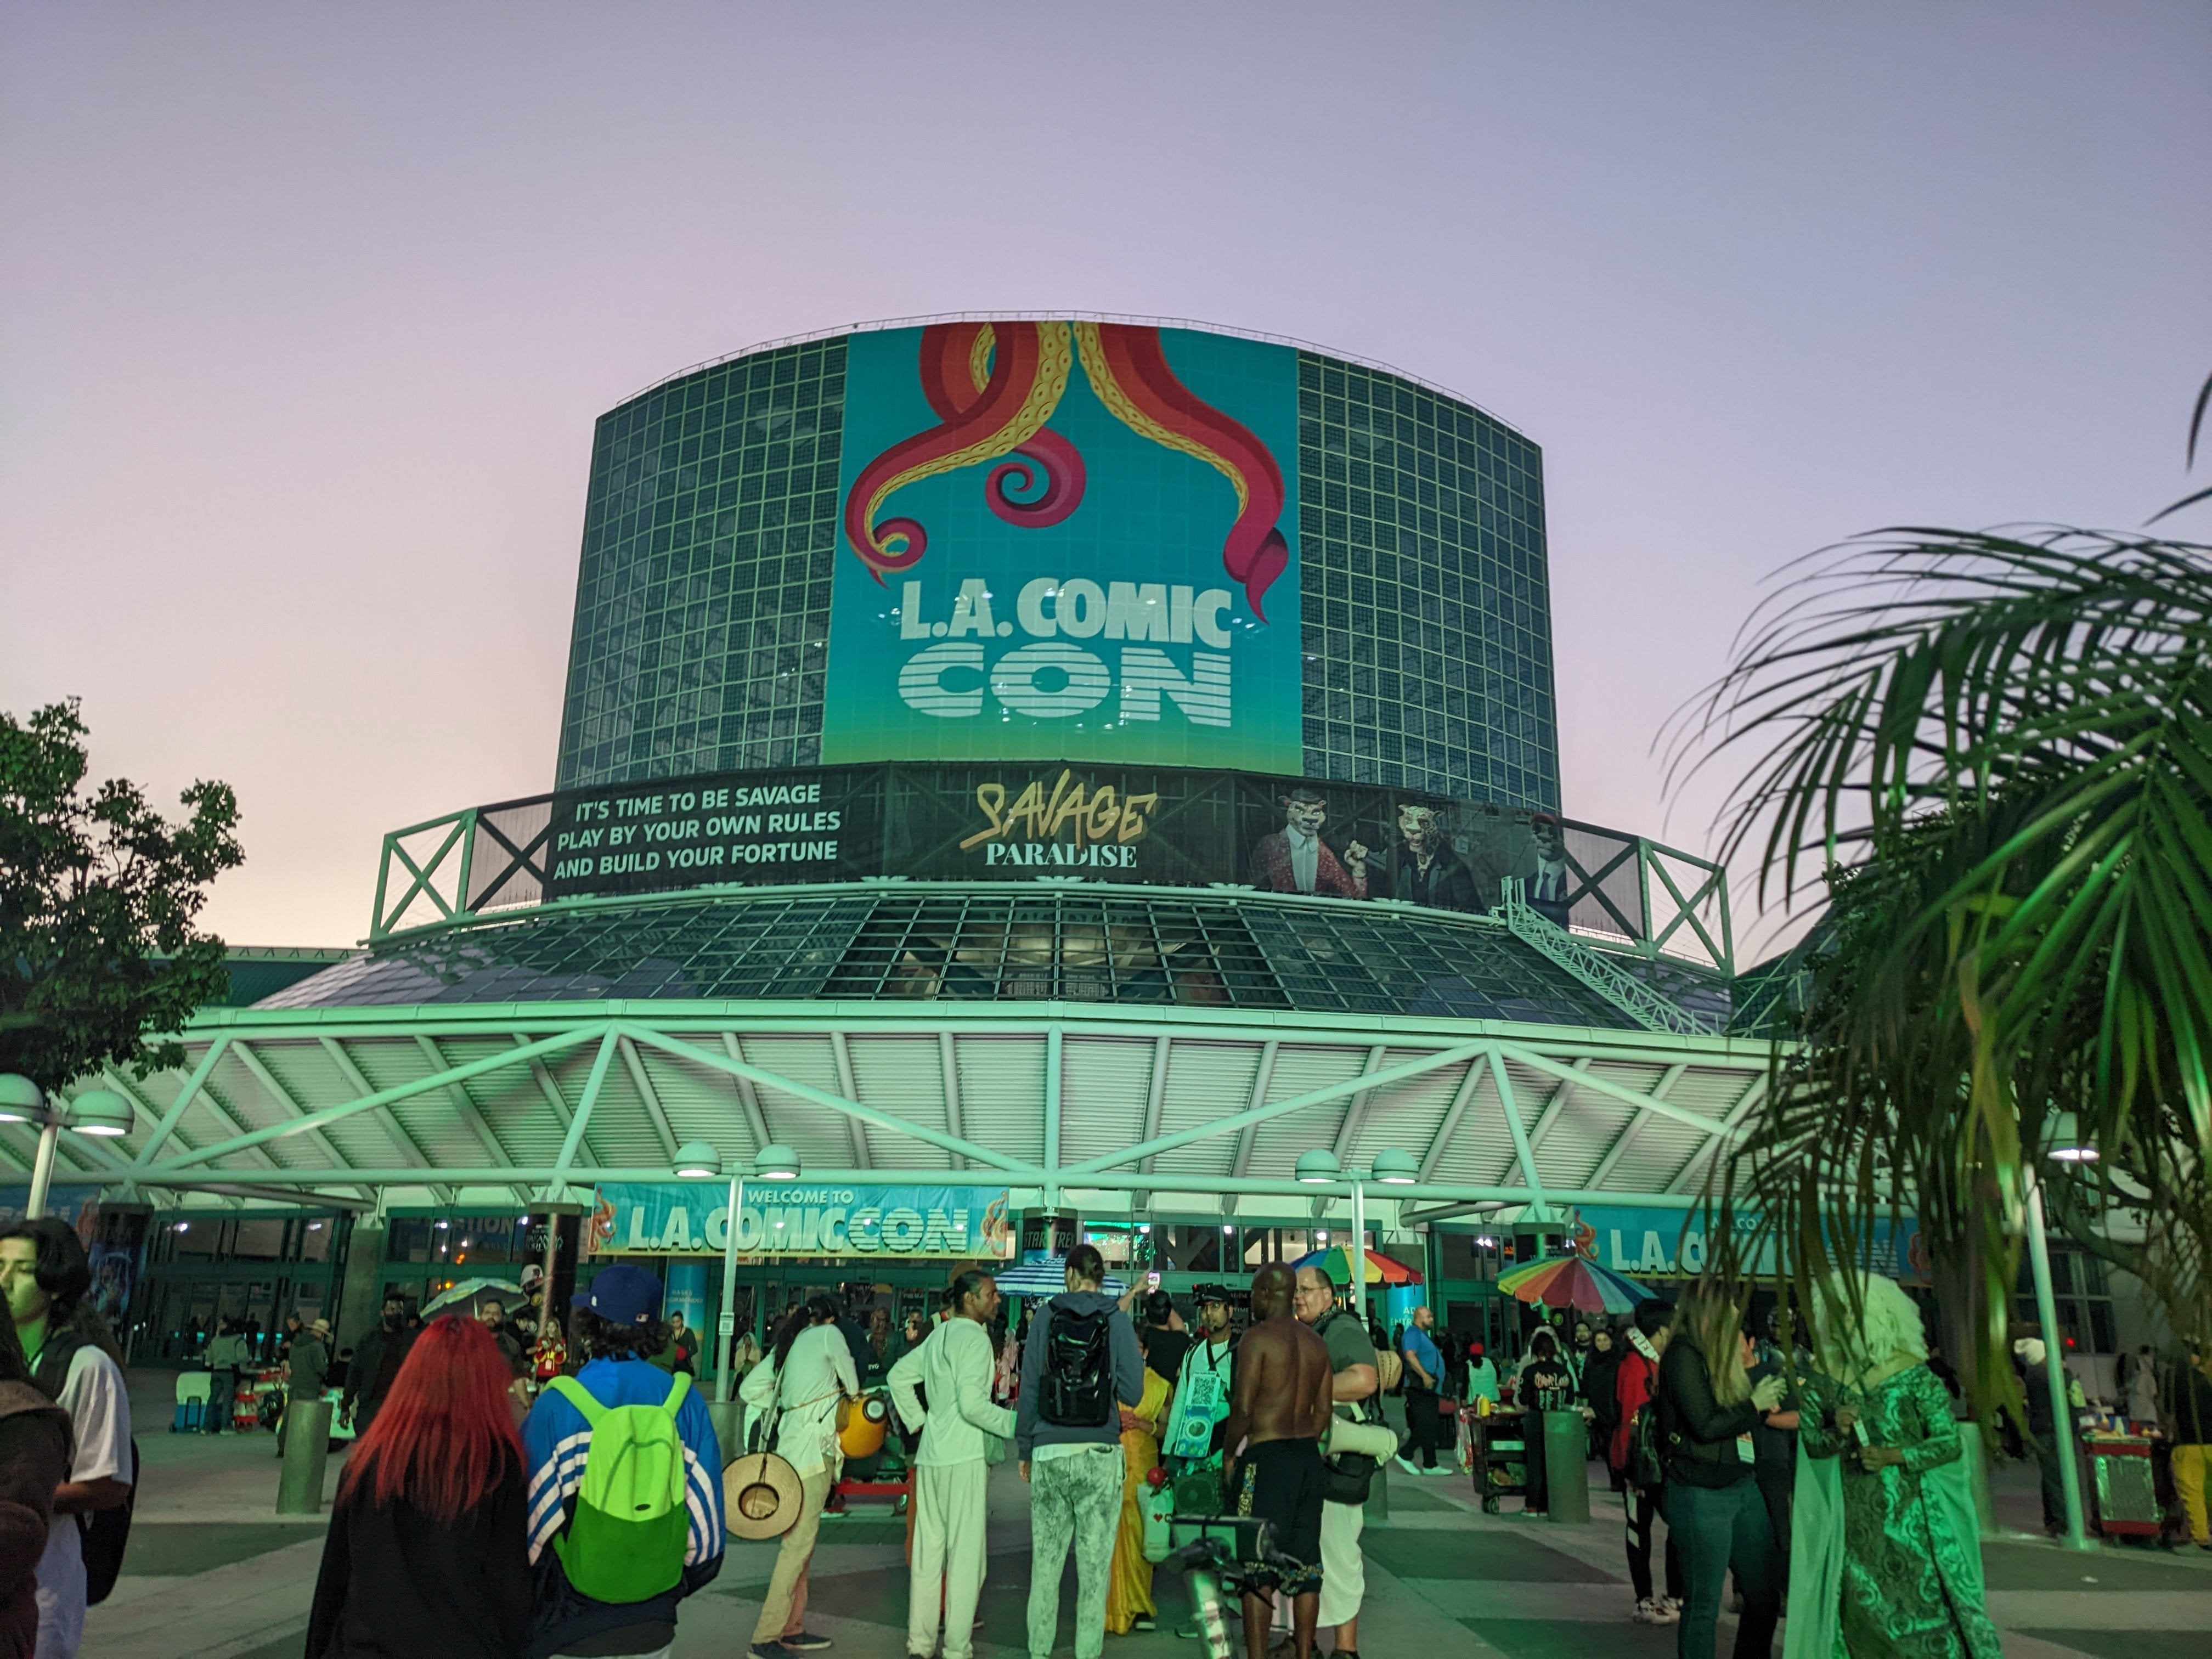 Exterior of LA Comic Con at dusk